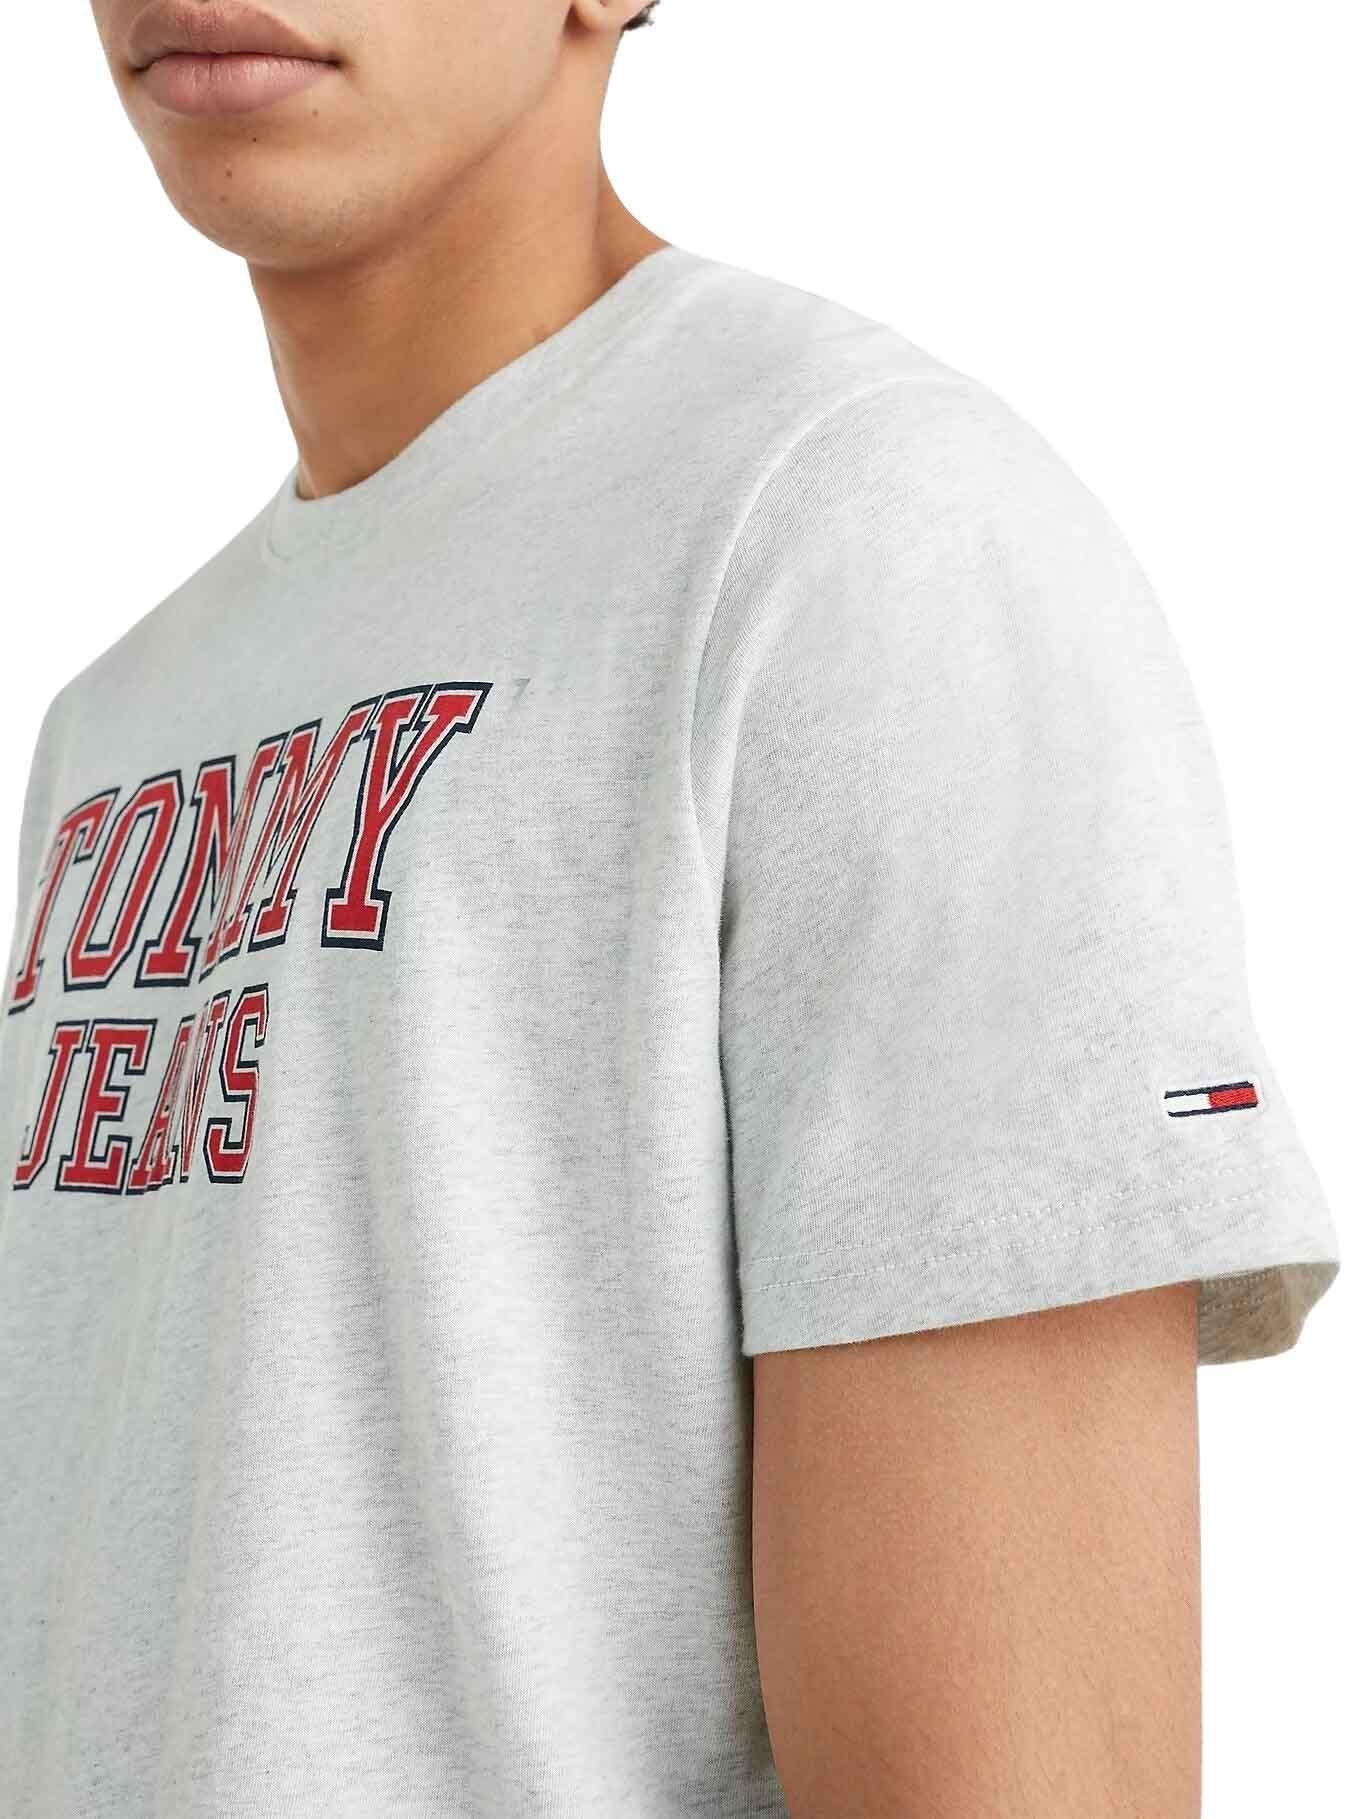 T-Shirt Tommy Jeans Essential Grigio per Uomo